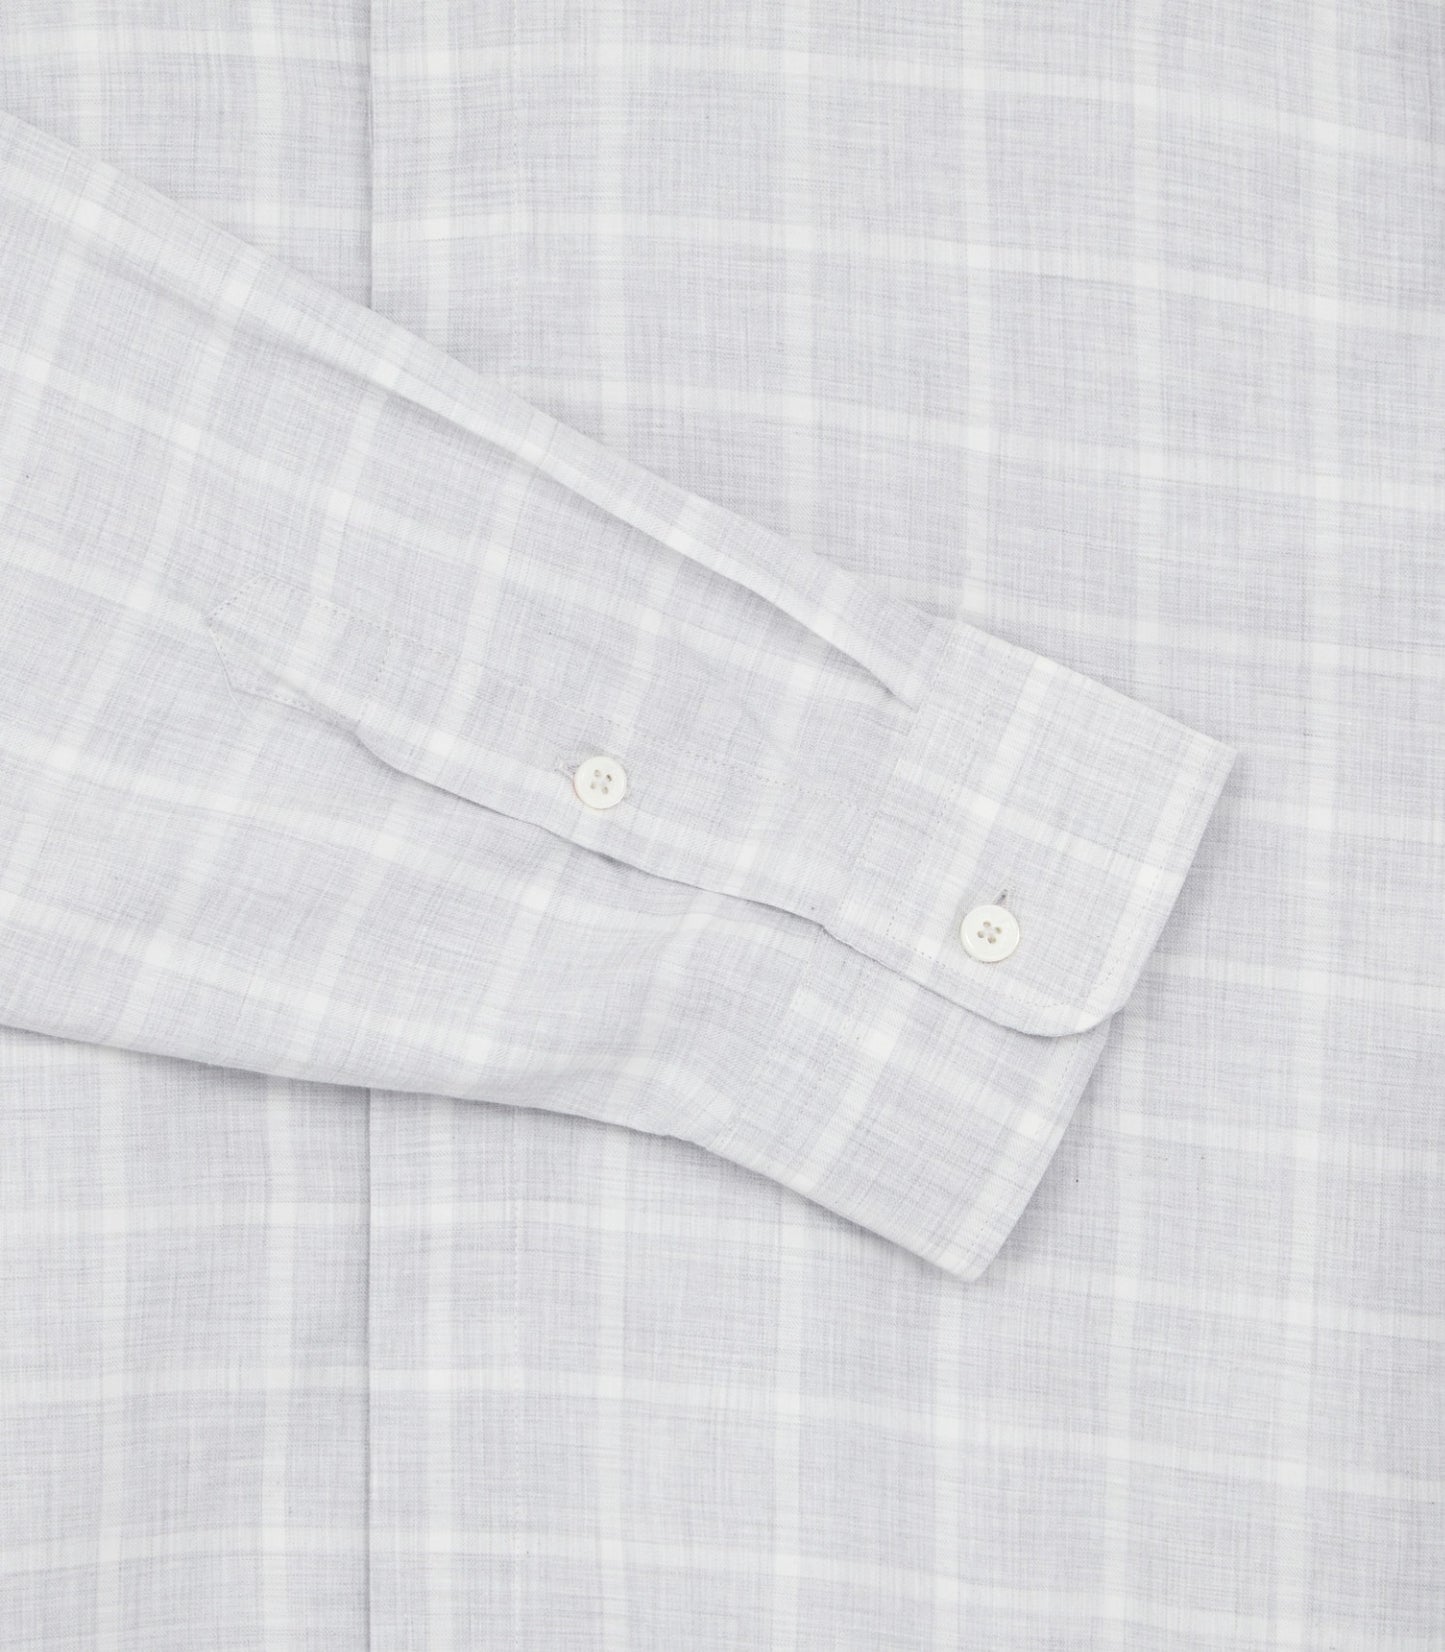 Men's Estate Shirt In Flannel Grey